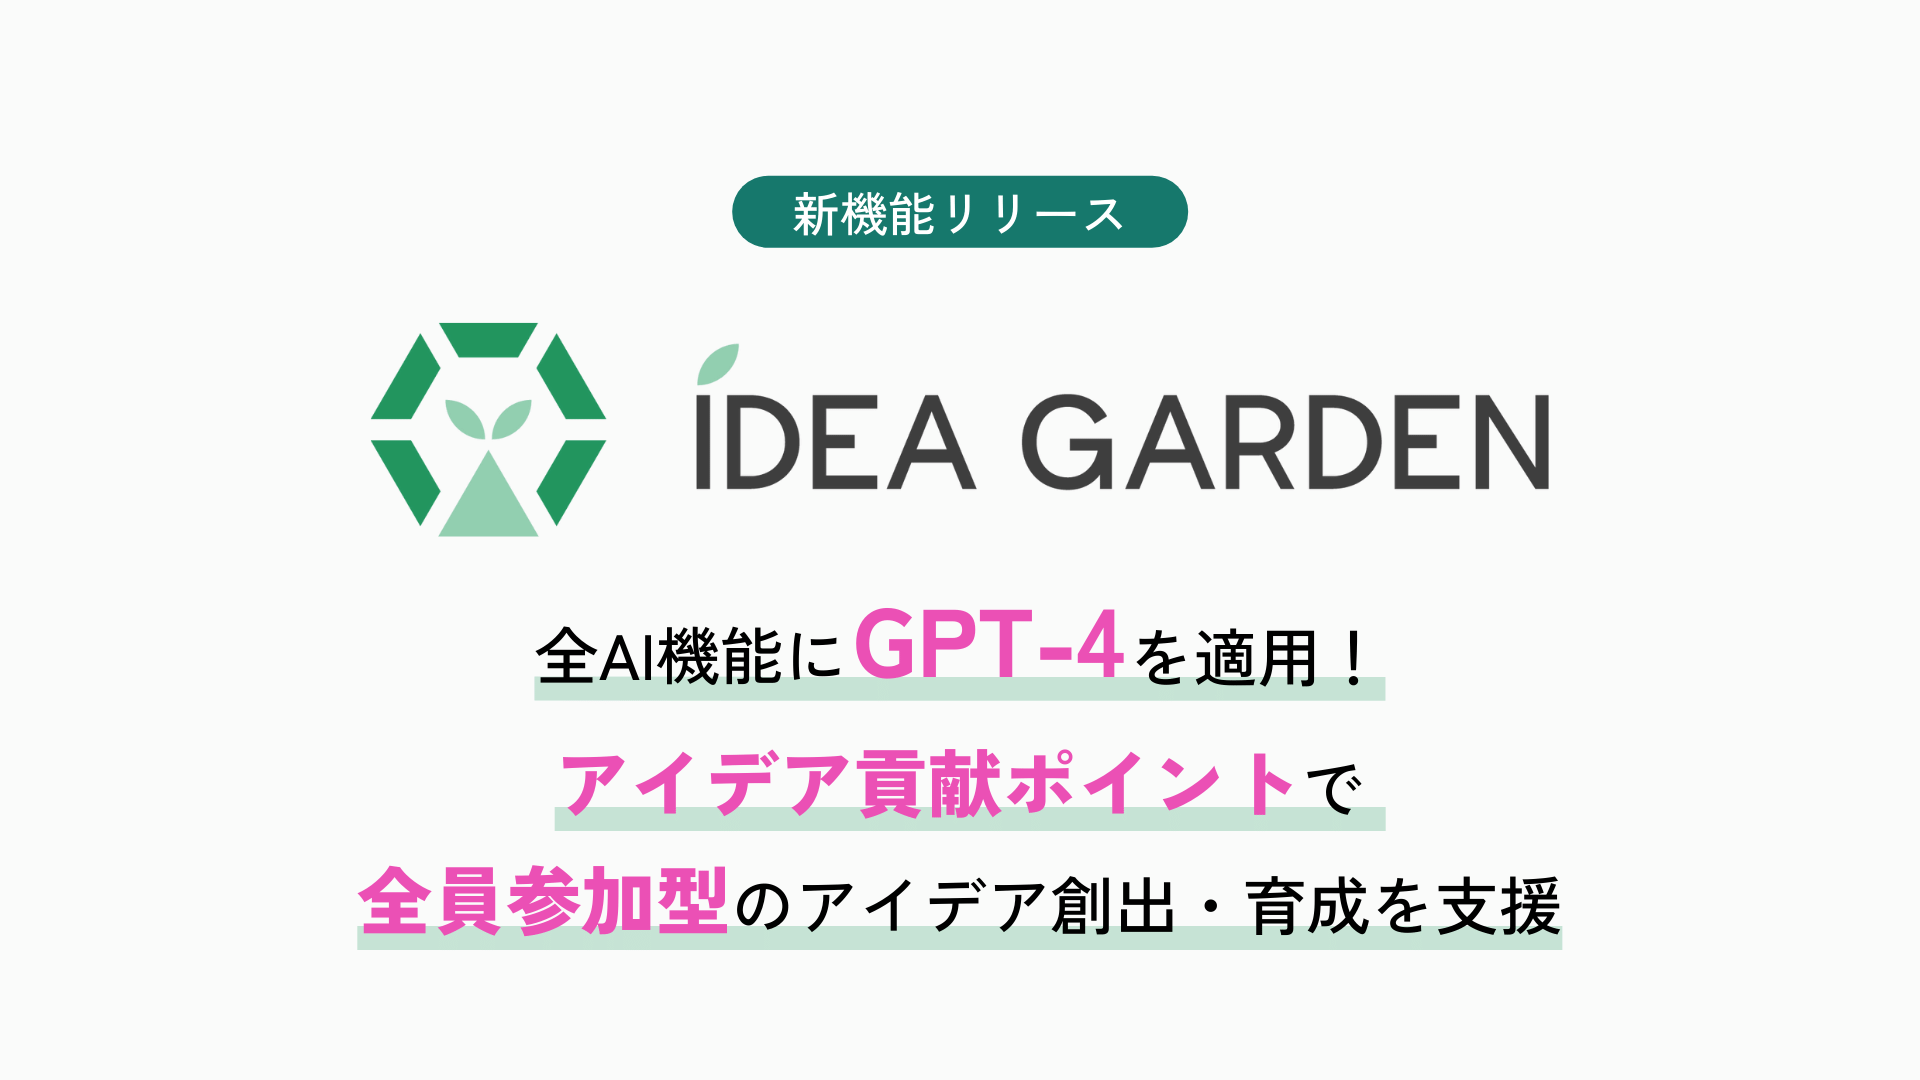 IDEA GARDENの全AI機能に「GPT-4」を適用。「アイデア貢献ポイント」で全員参加型の新規事業アイデア創出・育成を支援